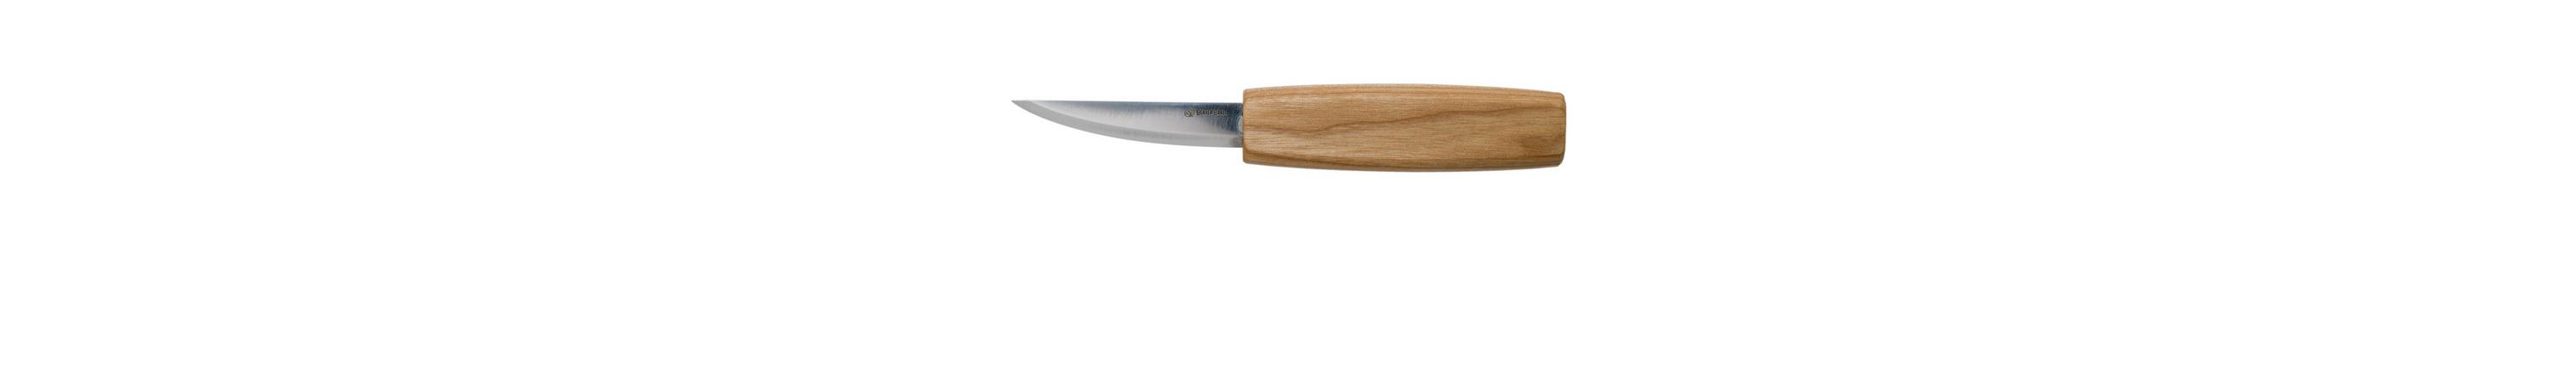 BeaverCraft Whittling Sloyd Knife C4M, wood carving knife